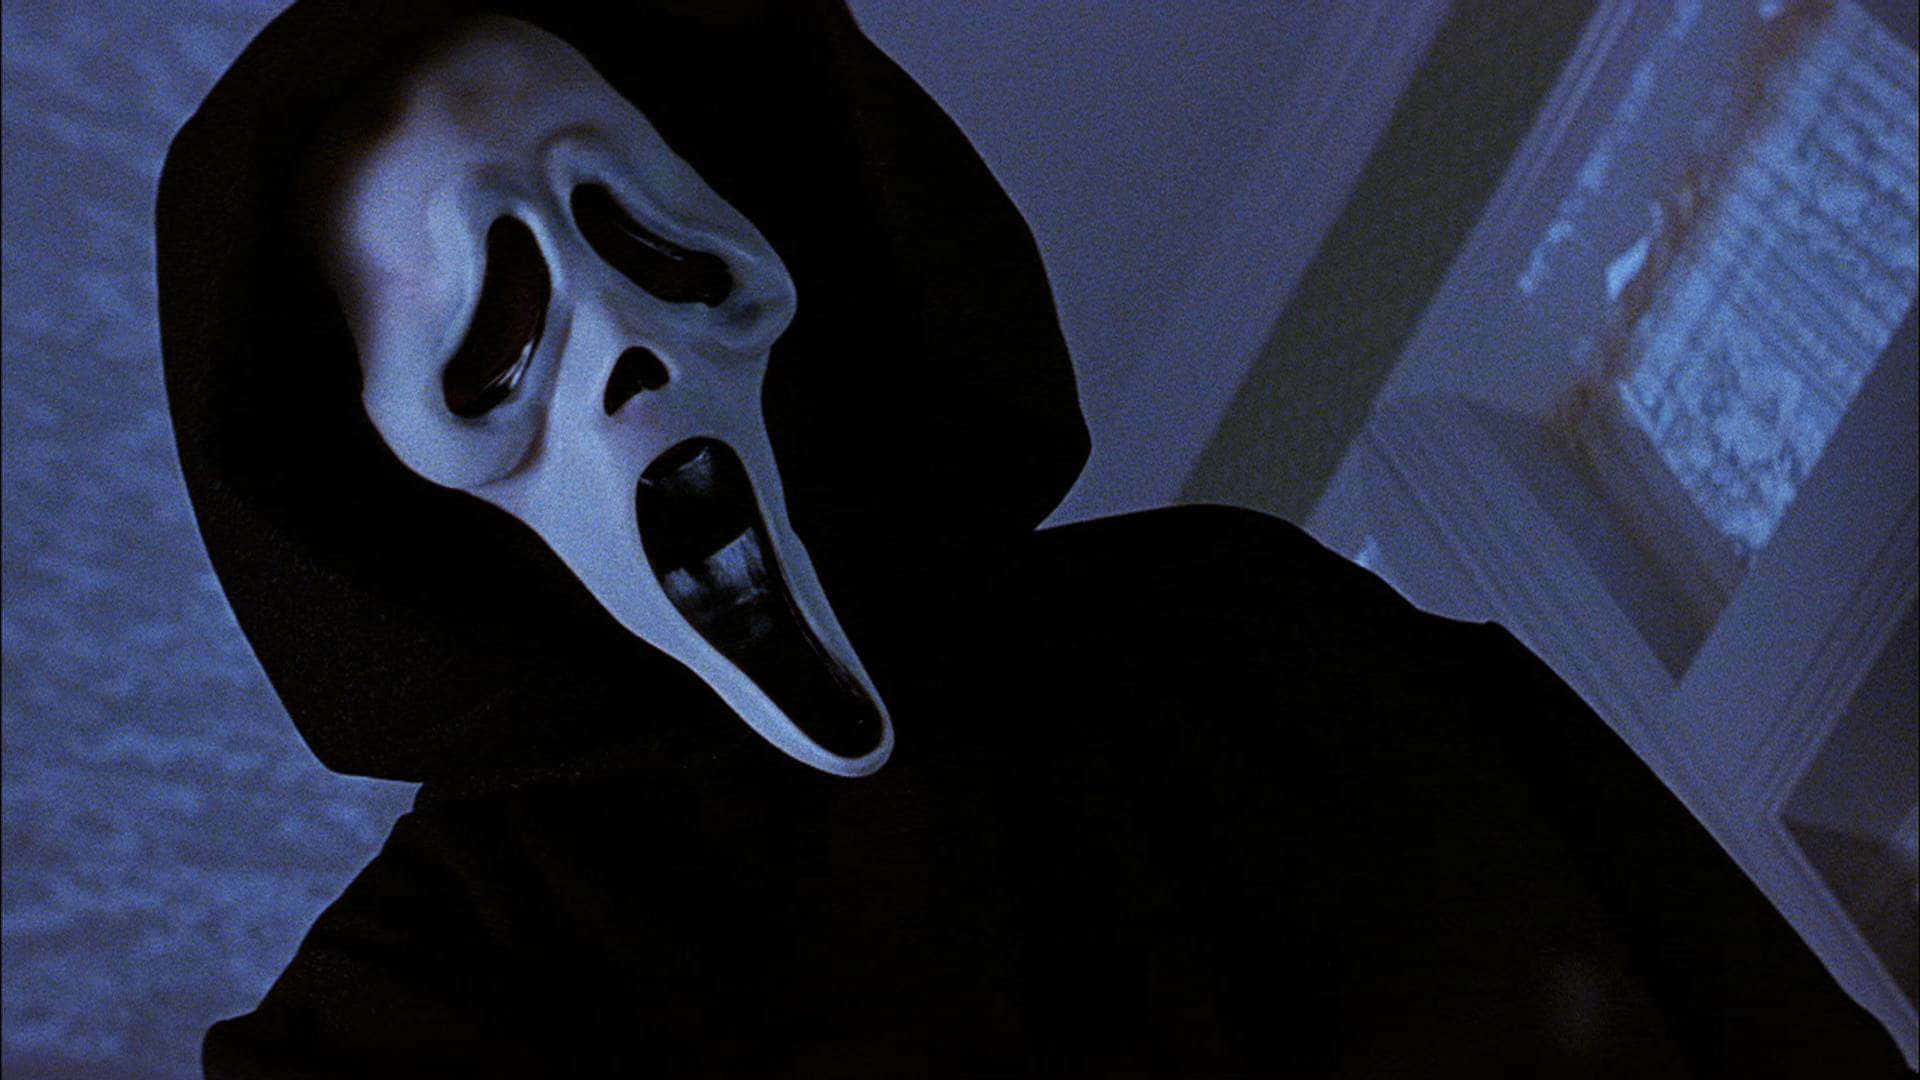 Scream Horror Ghost Face Picture